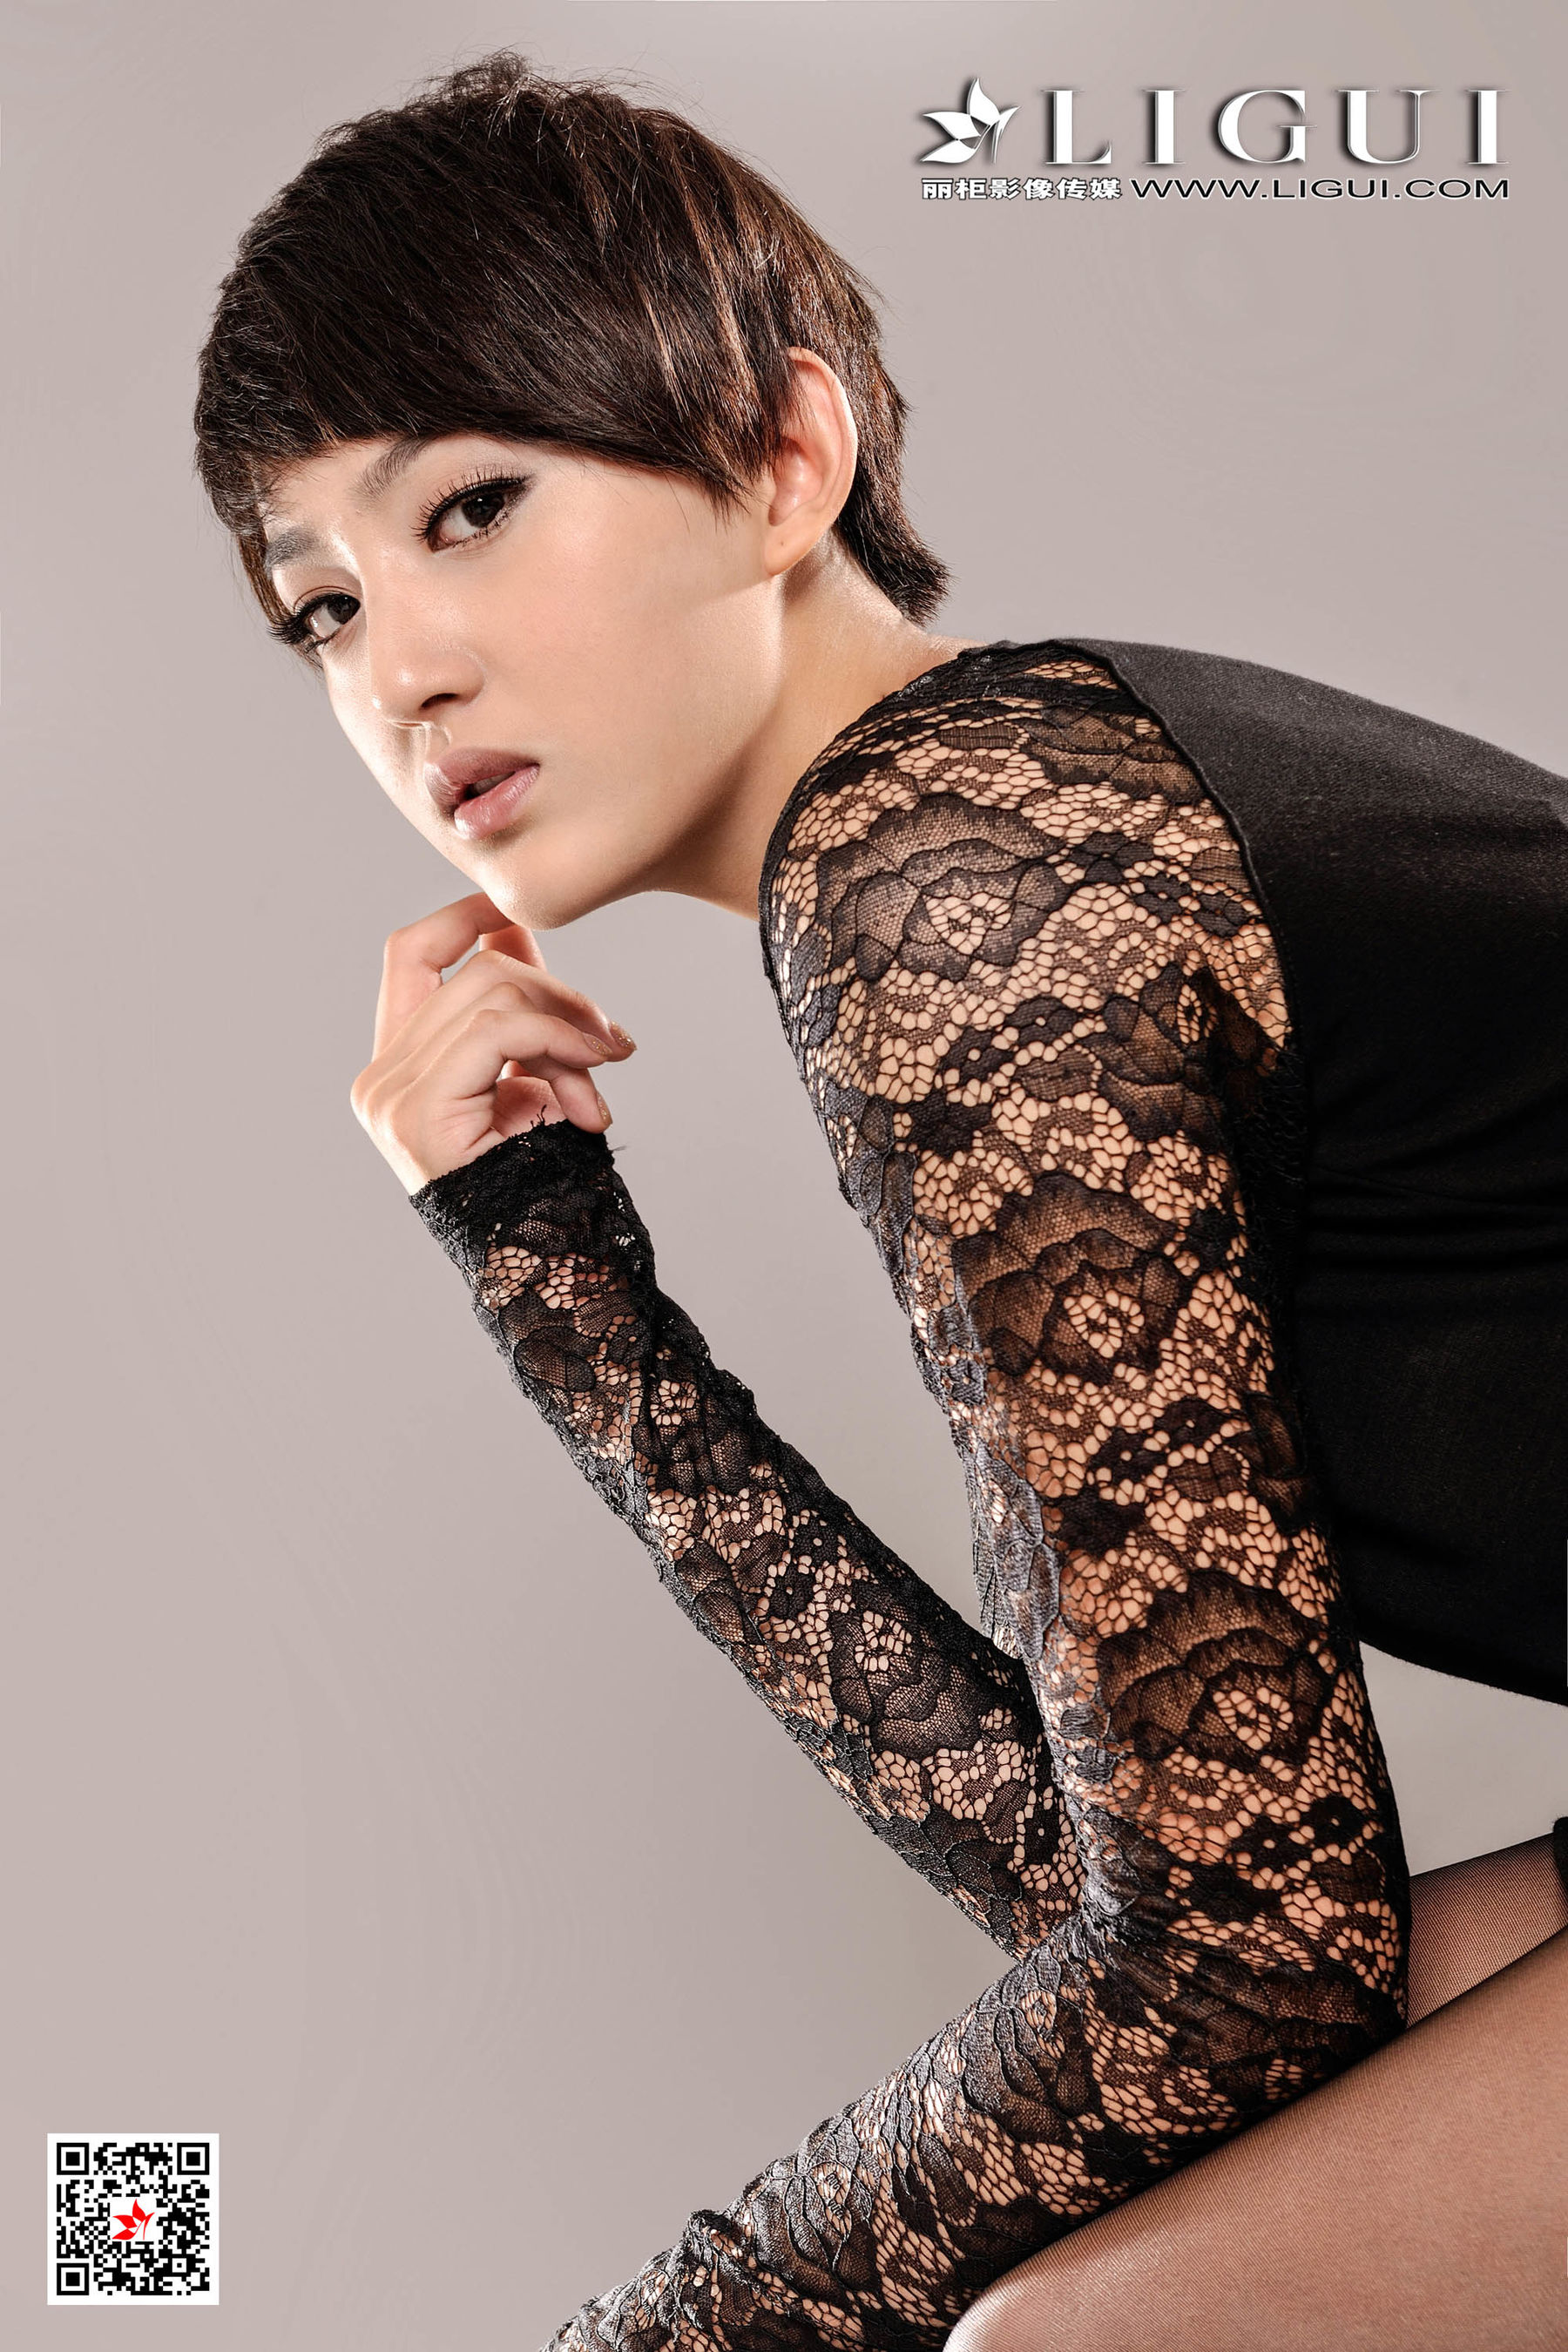 Model Xiaoqi “Black Lace” [Li Cabinet Ligui] Internet beauty photo album